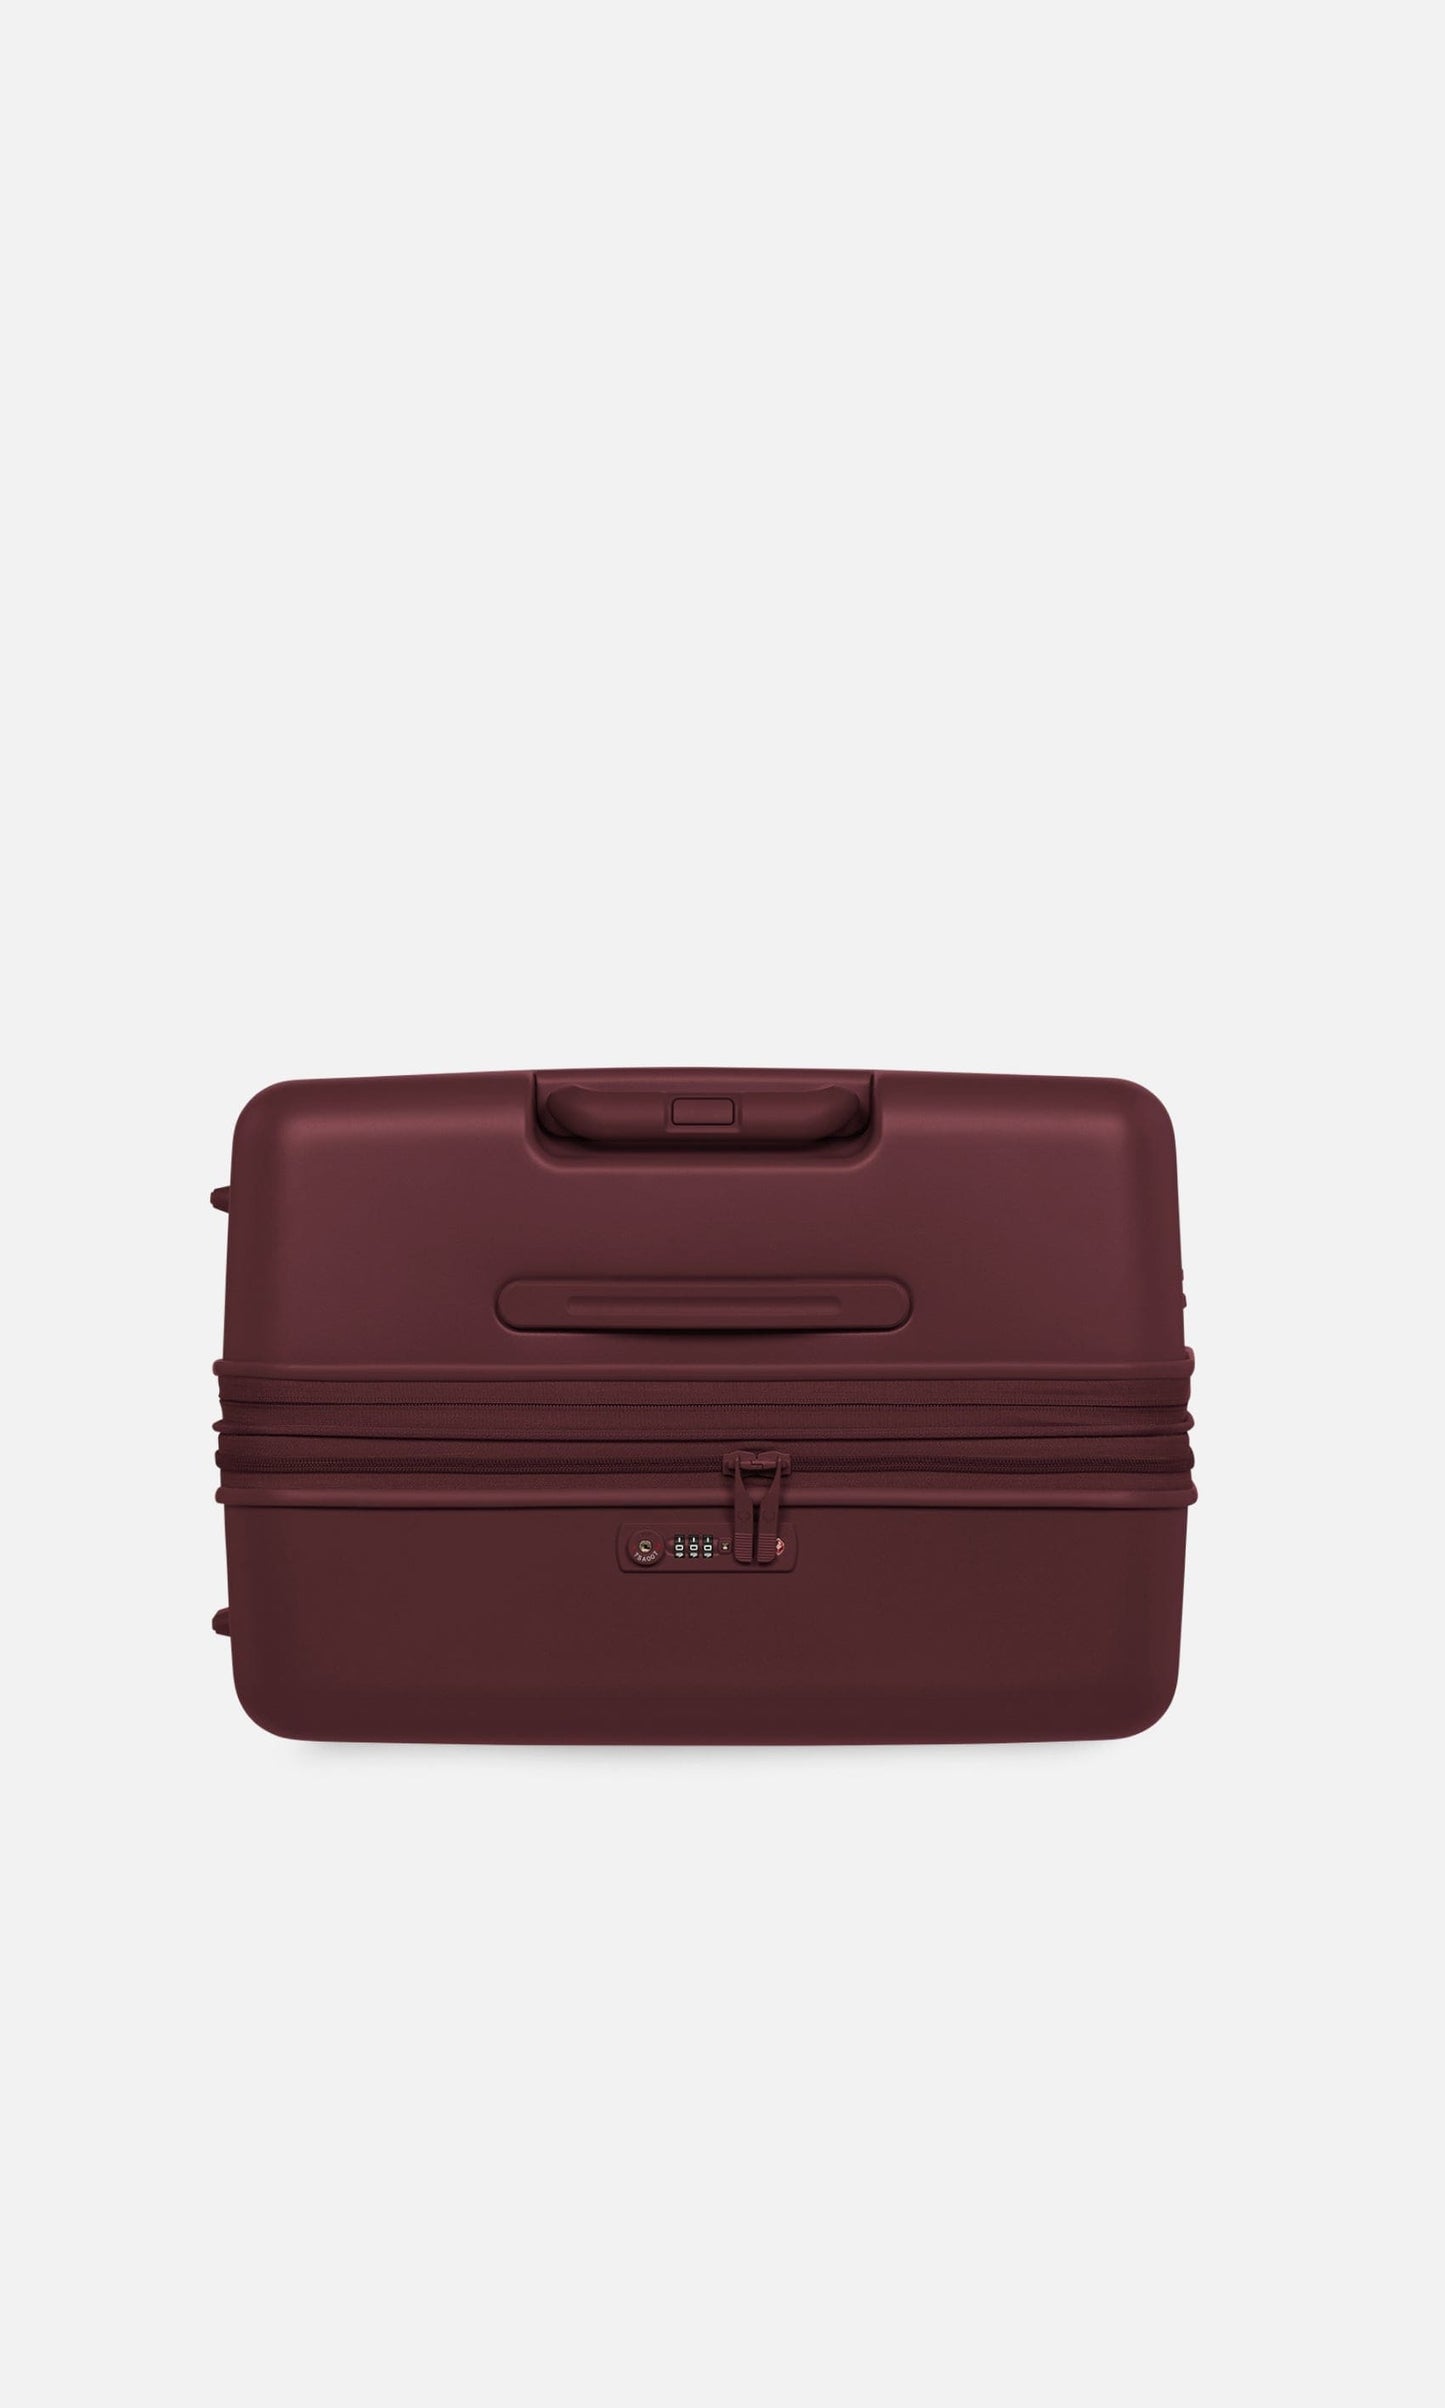 Antler Luggage -  Stamford medium in berry purple - Hard Suitcases Stamford Medium Suitcase Purple | Hard Luggage | Antler 